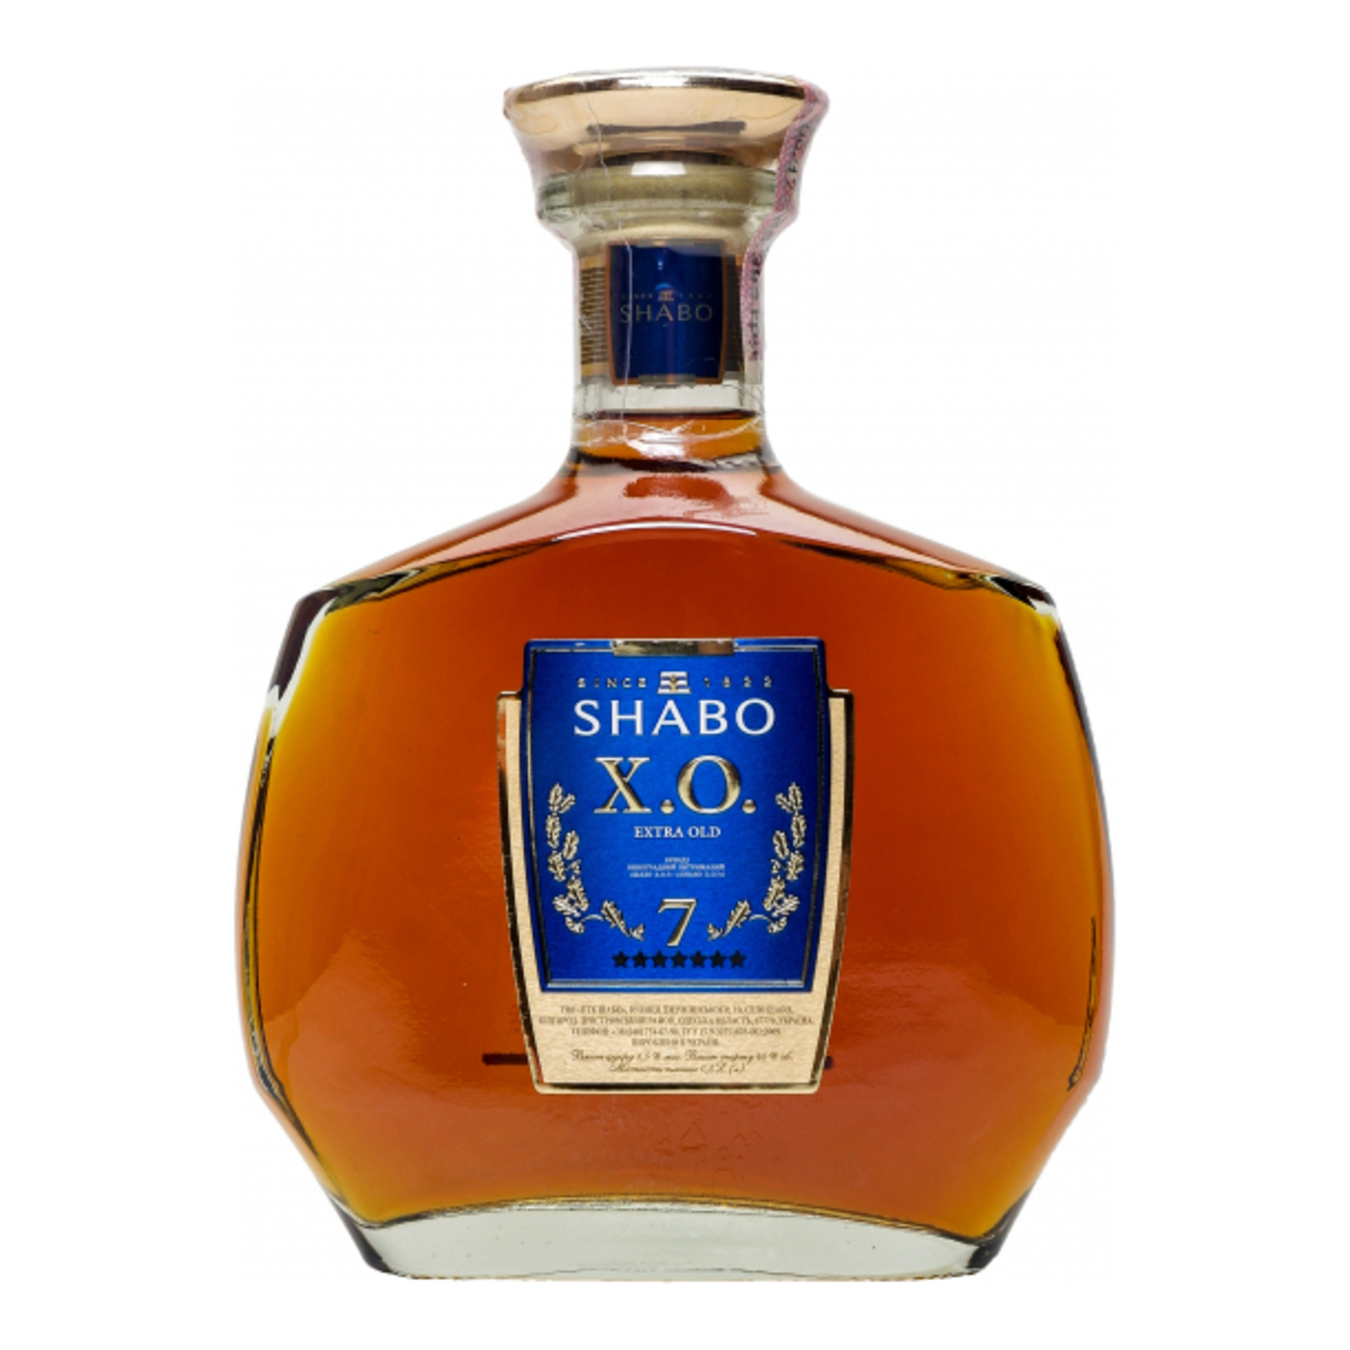 Shabo Х.О. 7 stars brandy 40% 0,5l